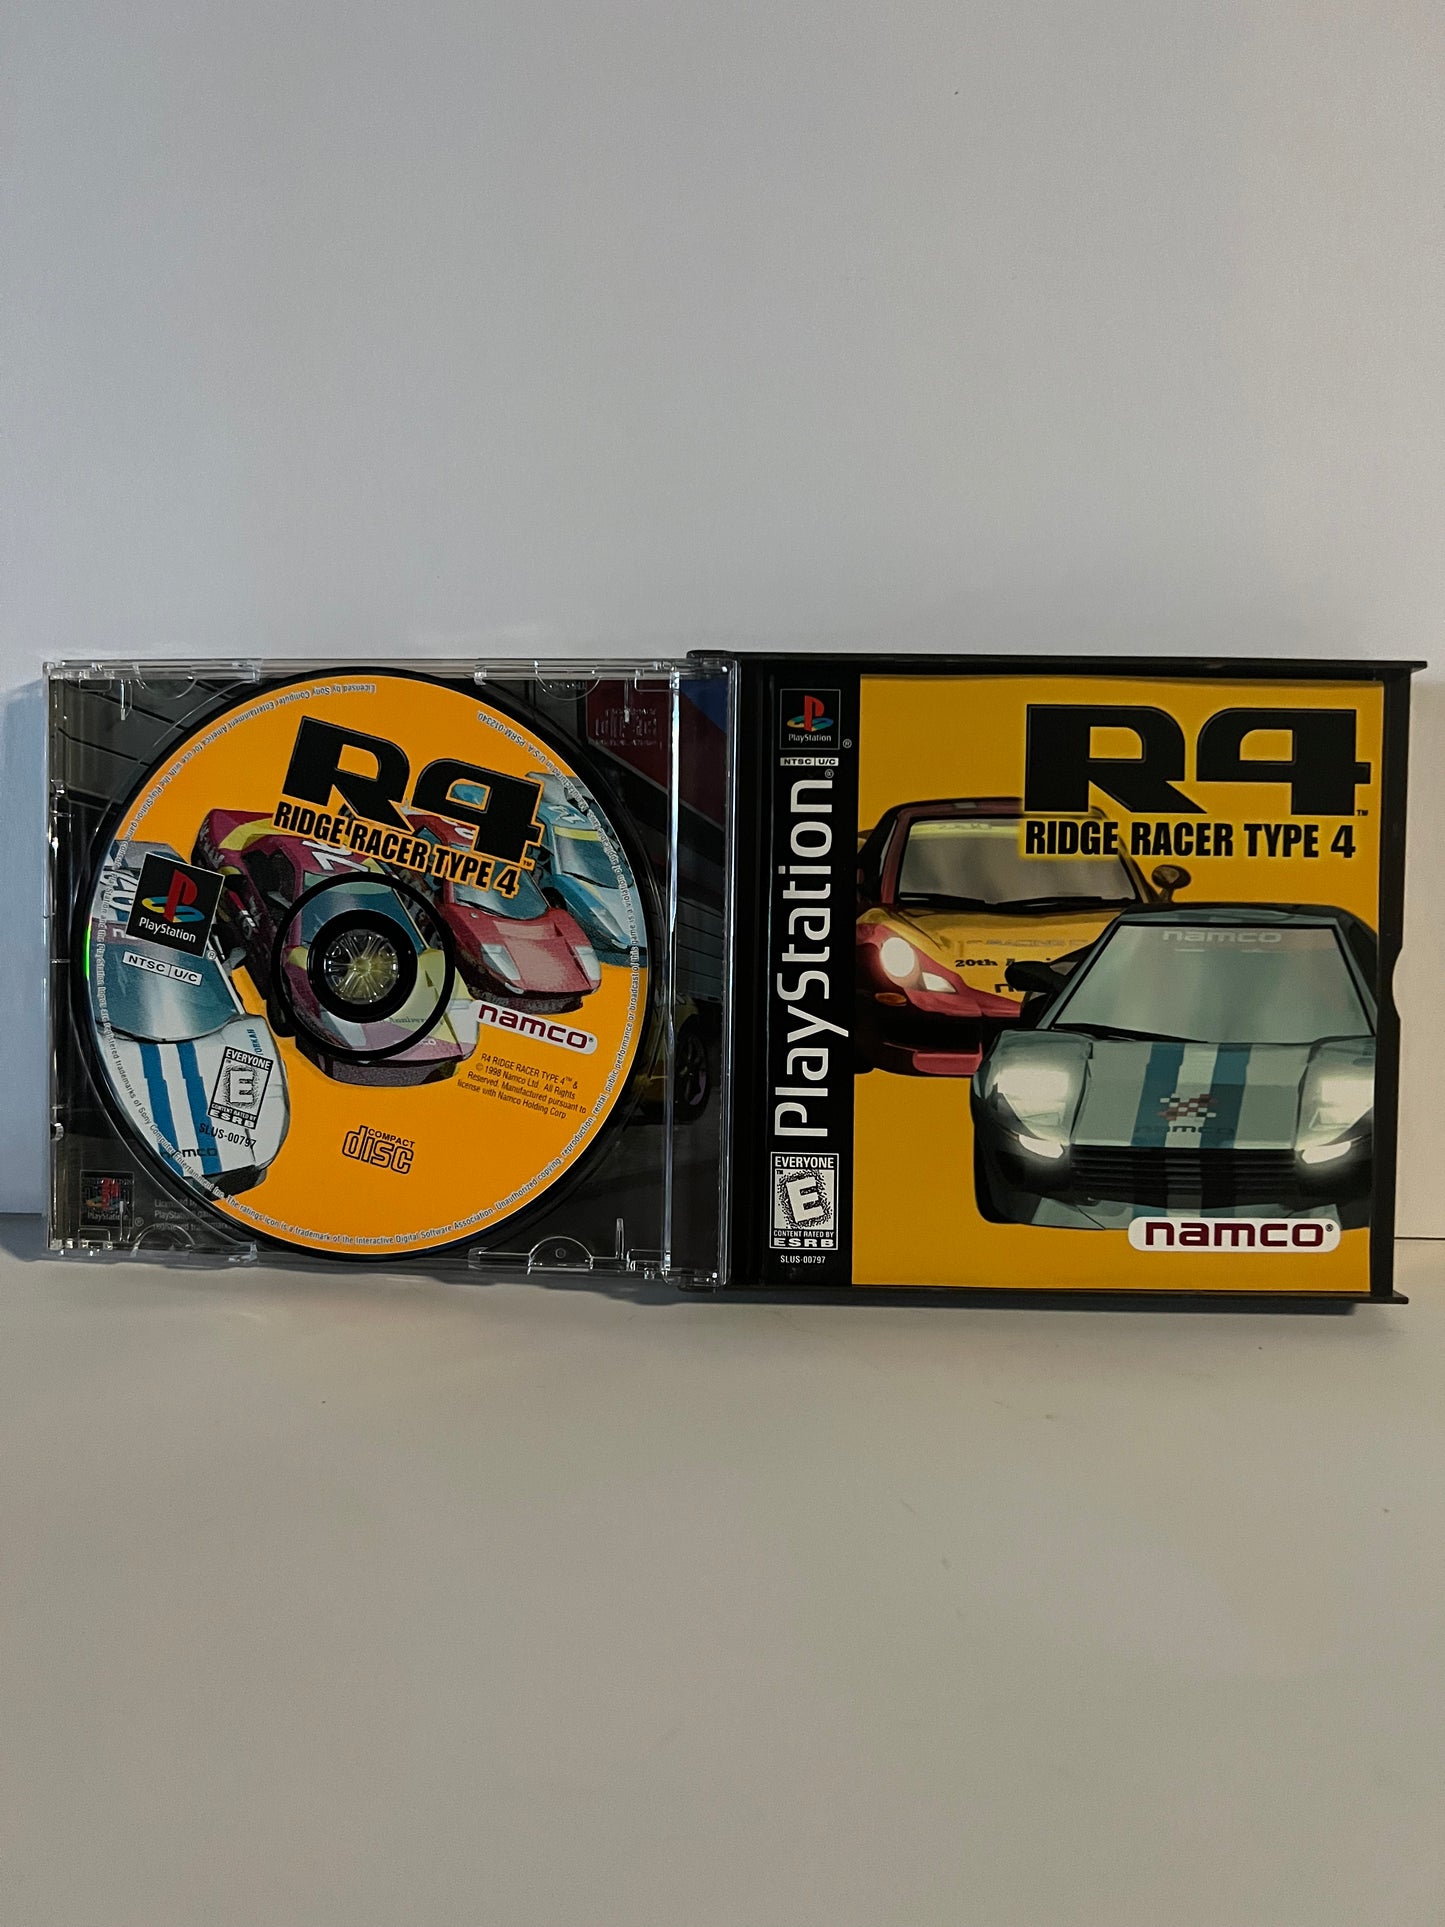 Ridge Racer Type 4 - PS1 Game - Used